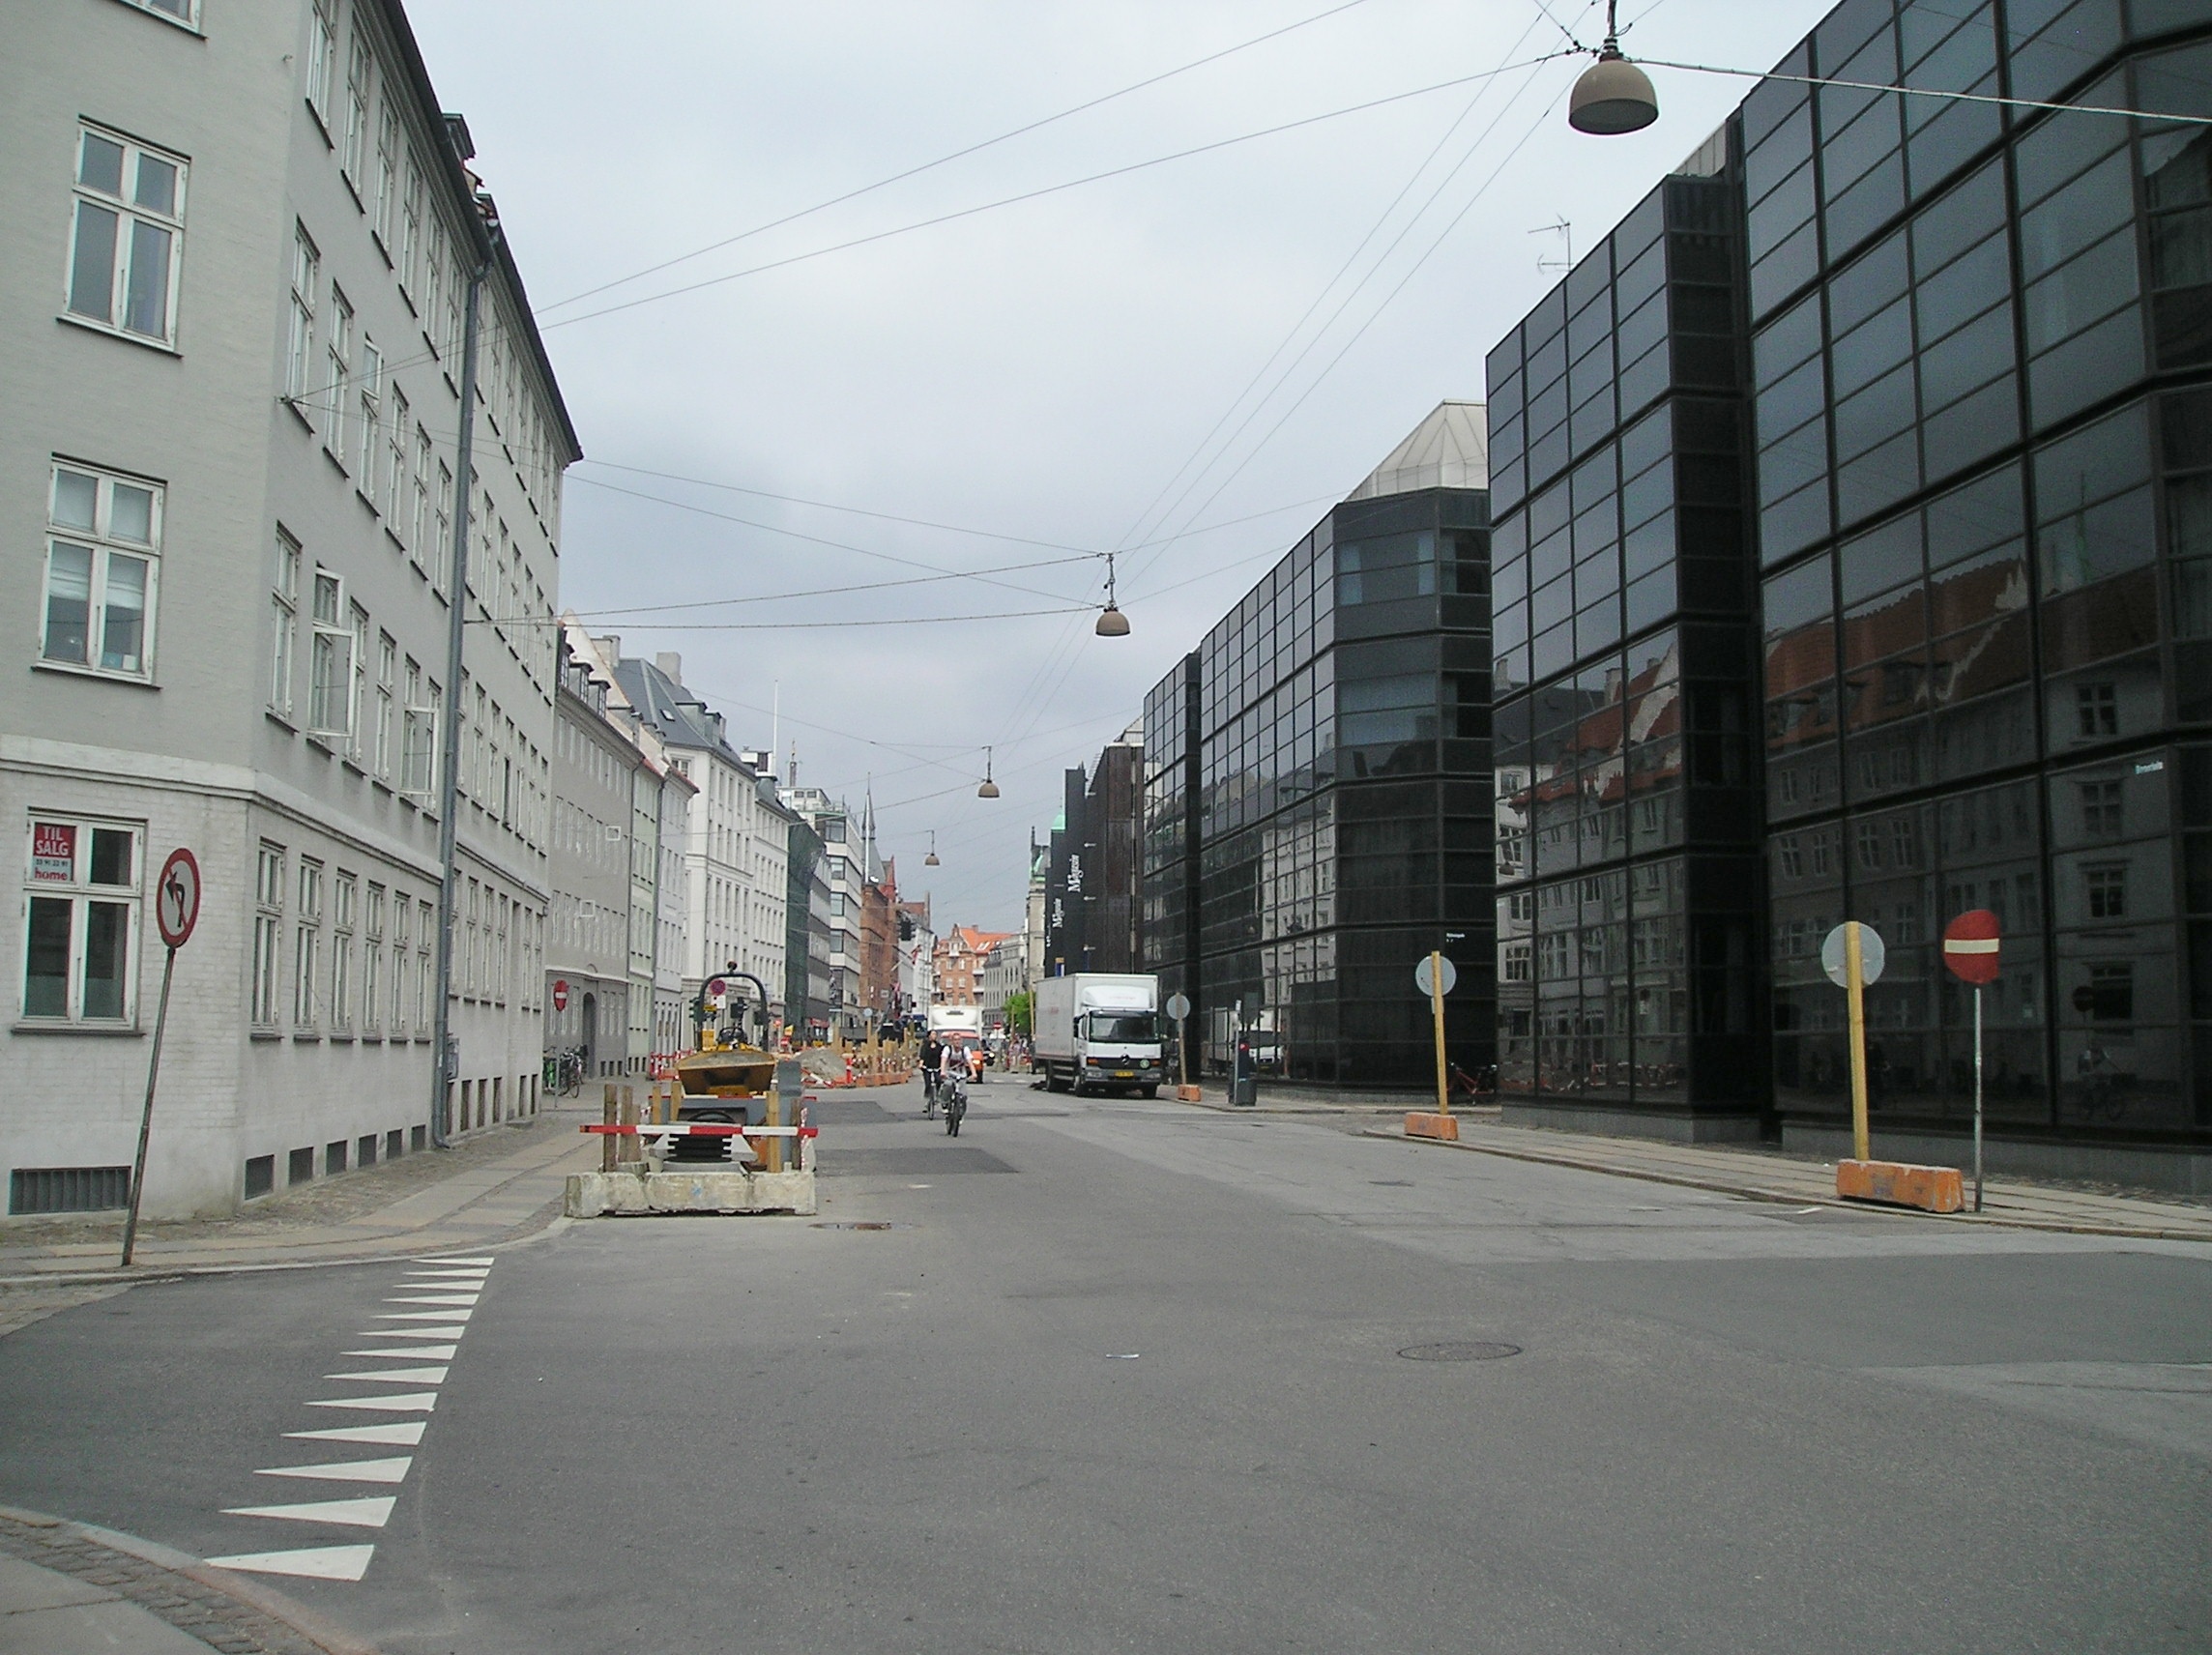 Bremerholm (københavnsk - Wikipedia, frie encyklopædi